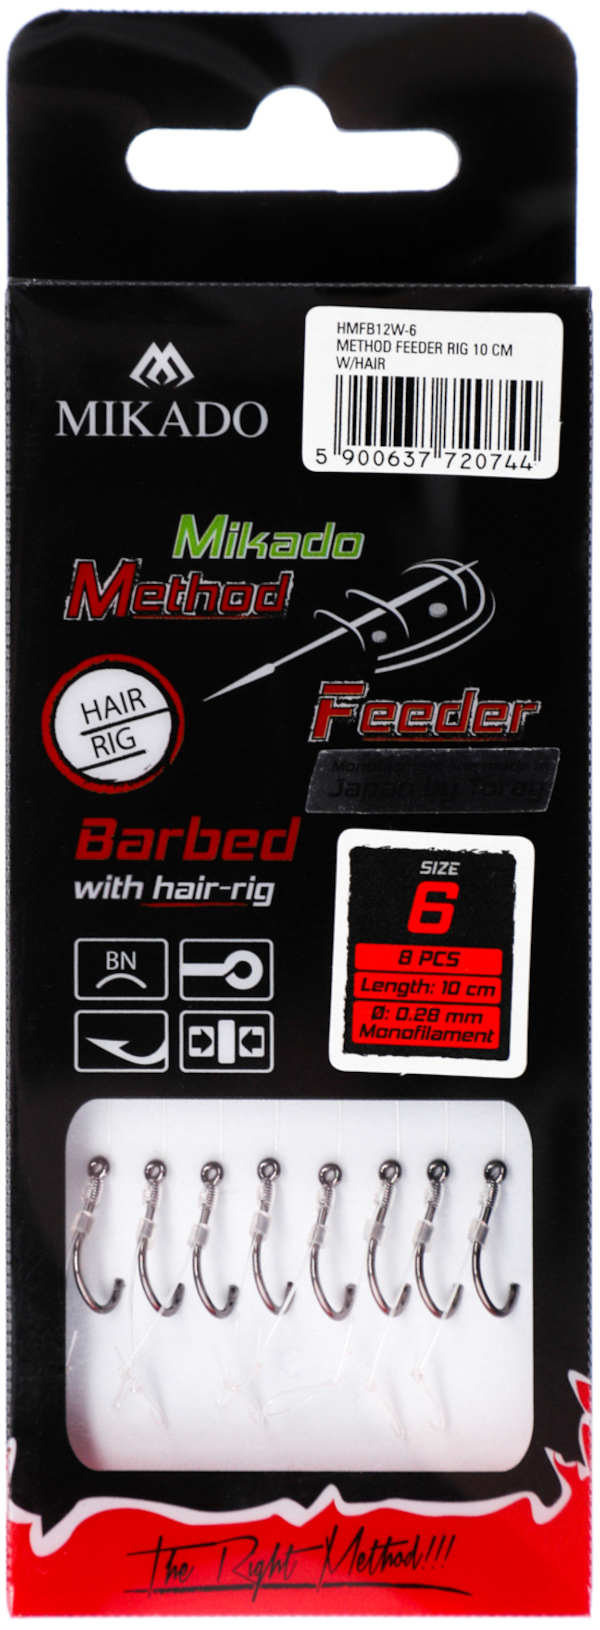 Mikado Method Feeder Rig mit Haar